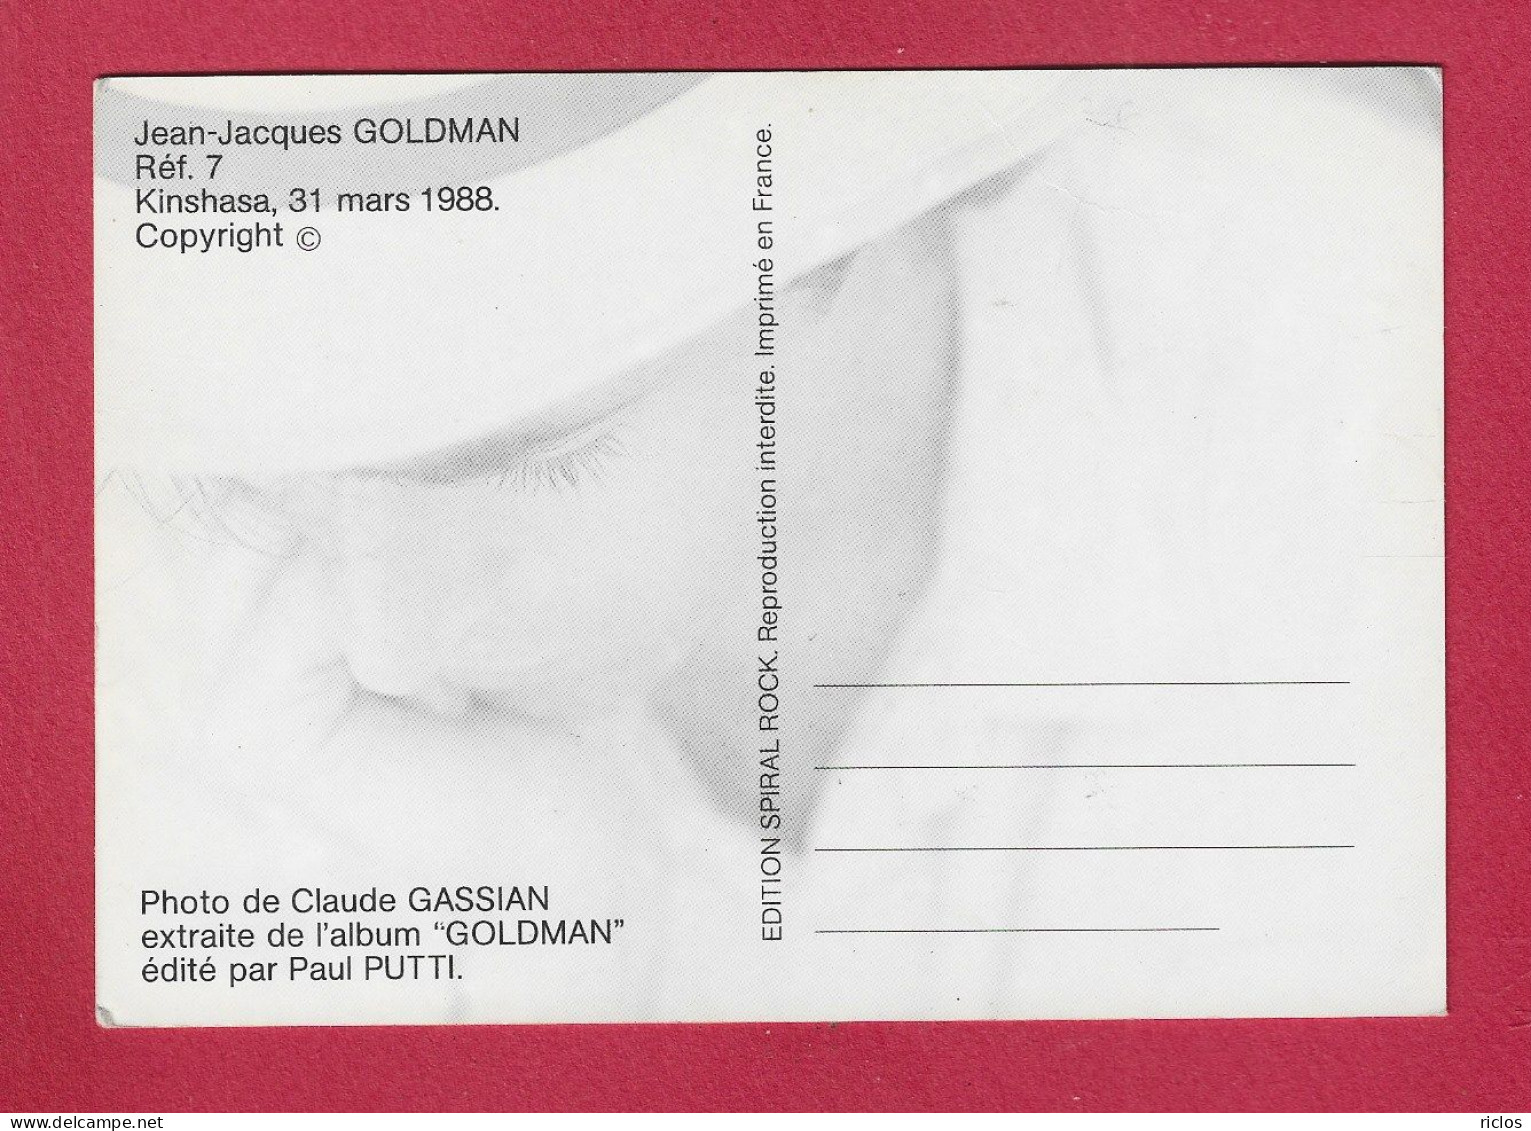 GOLDMAN JEAN-JACQUES - KINSHASA 31 MARS 1988 - Artistes